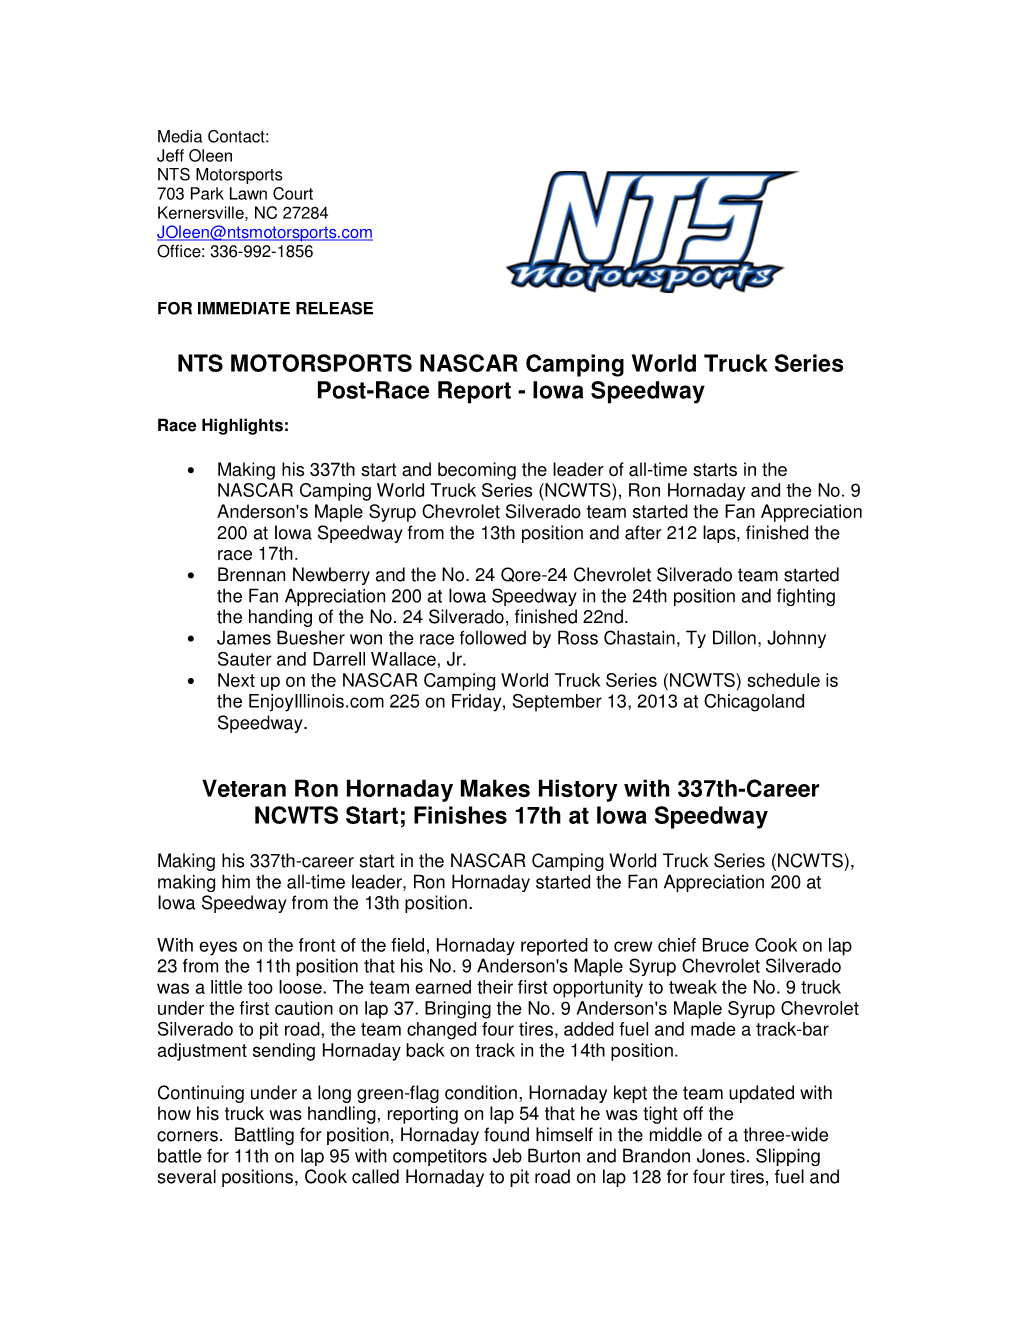 NTS MOTORSPORTS NASCAR Camping World Truck Series Post-Race Report - Iowa Speedway Race Highlights